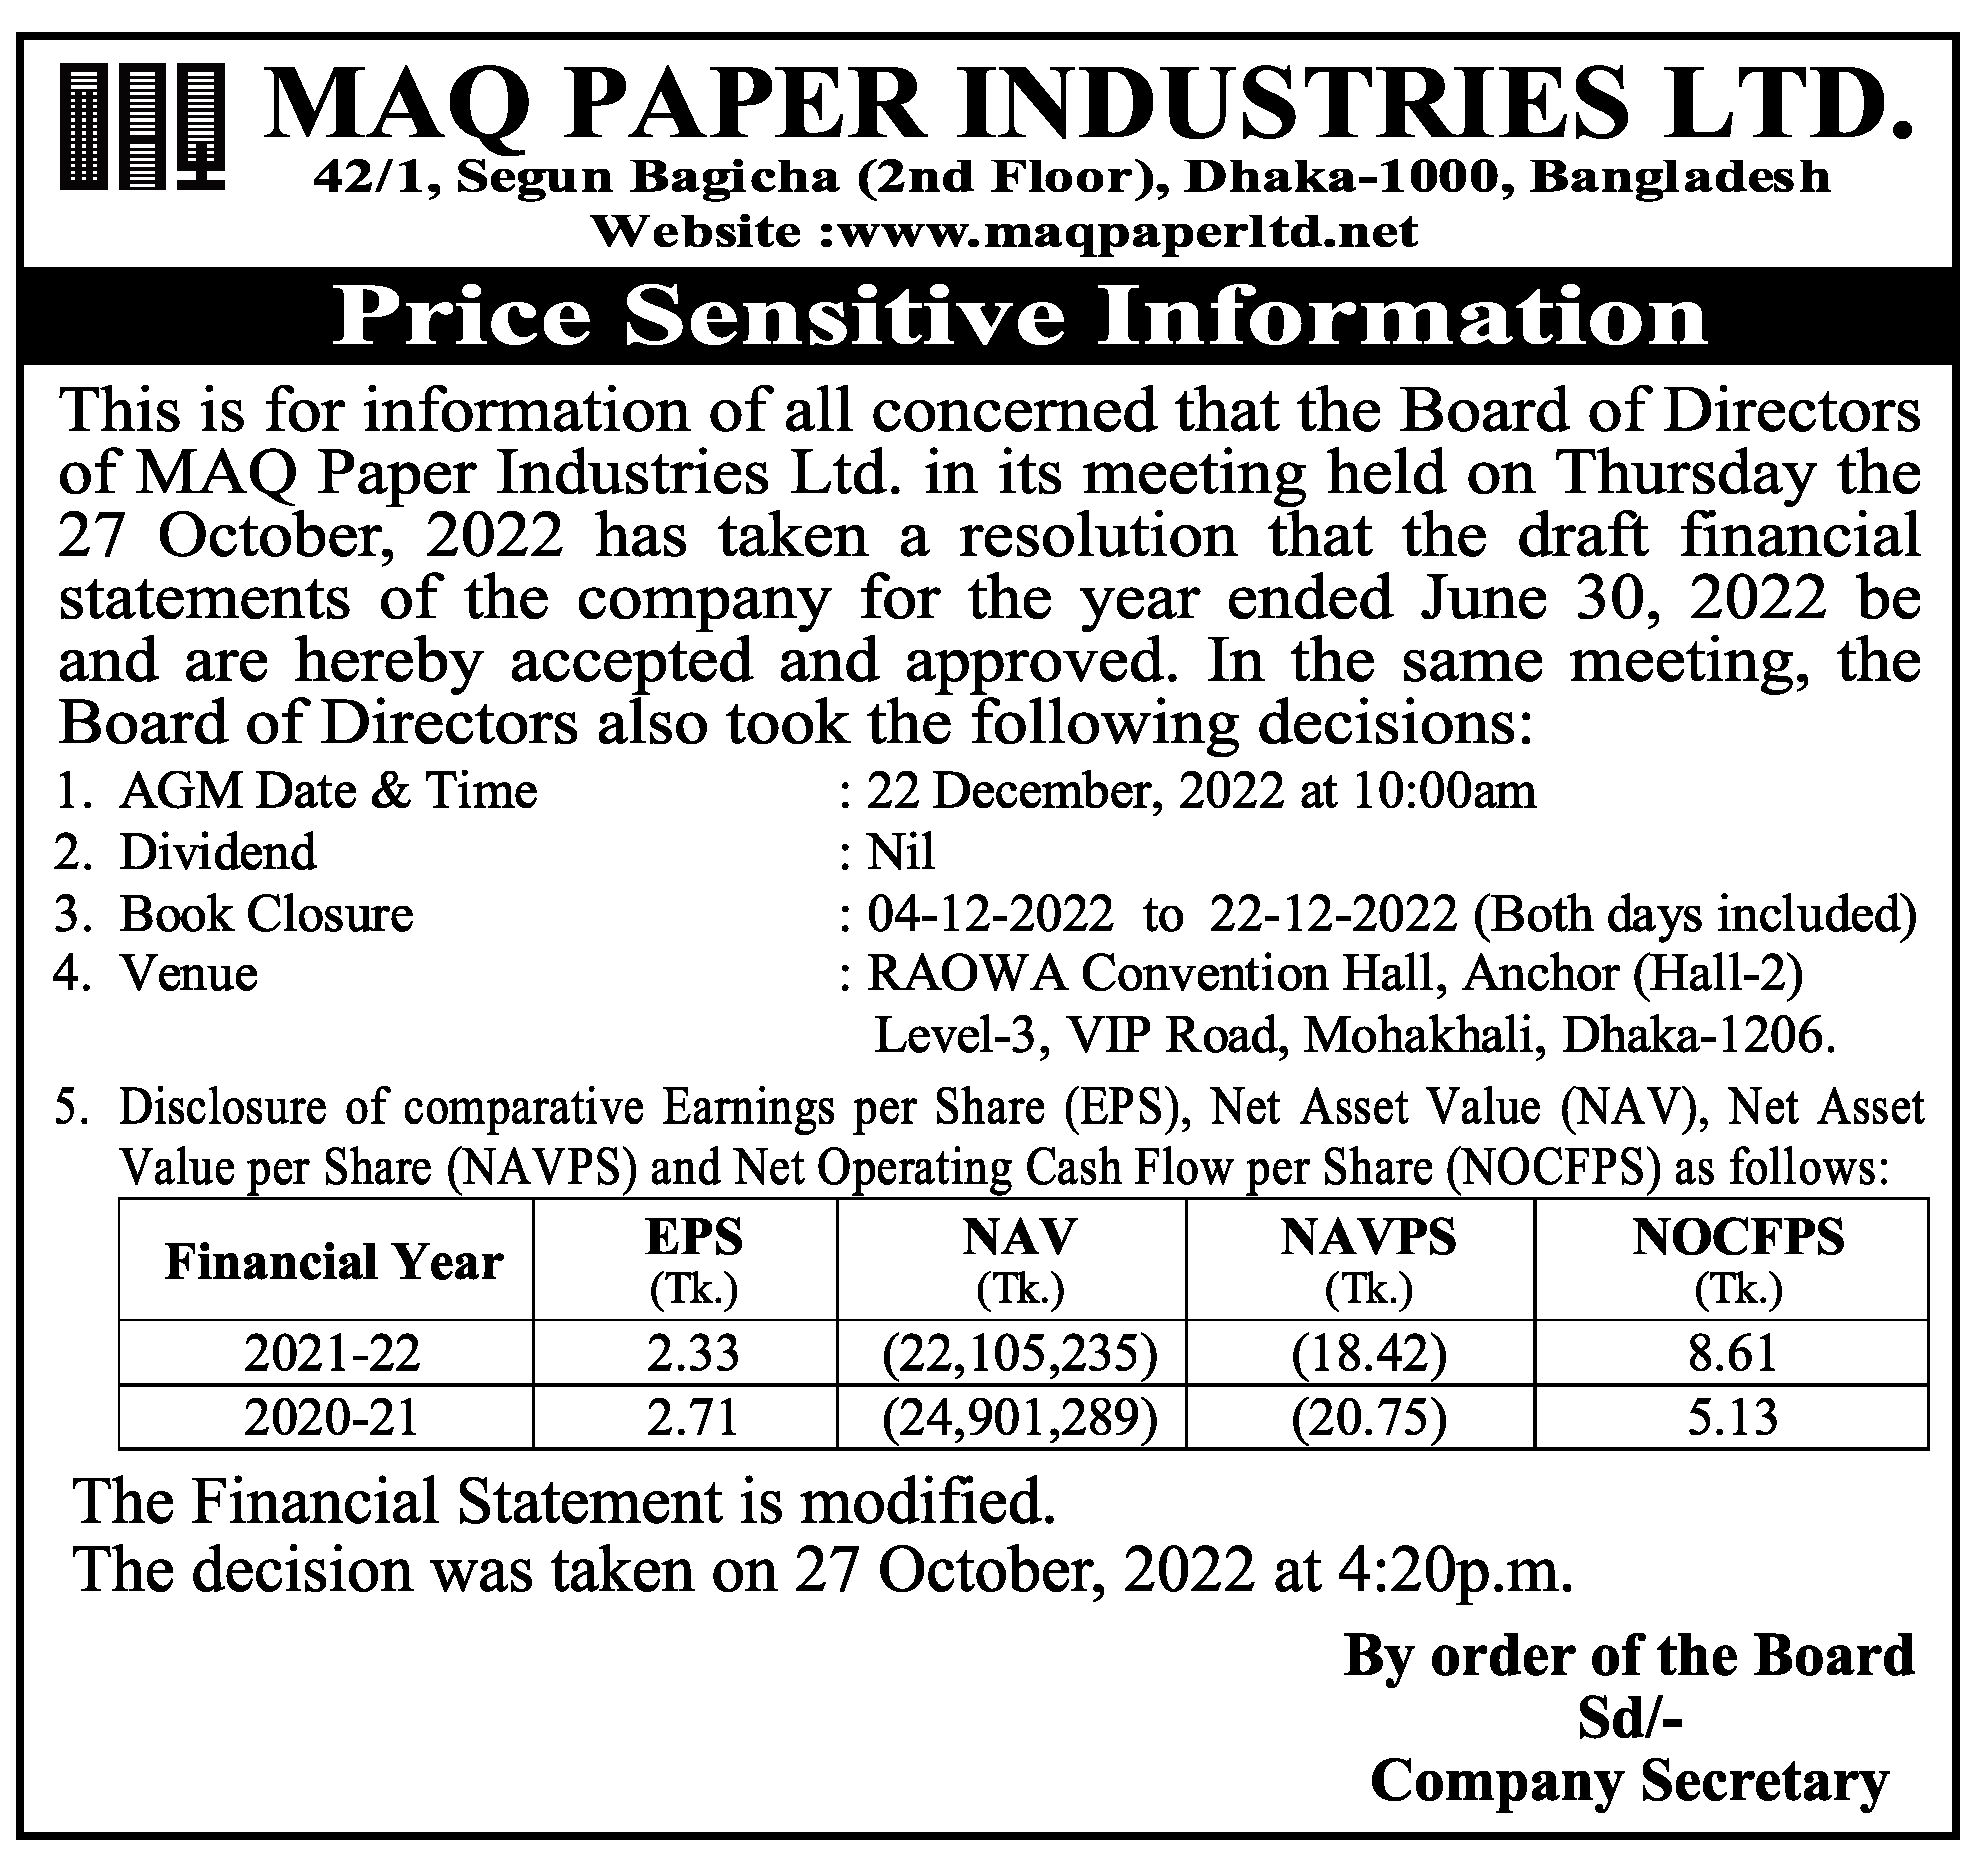 Price Sensitive Information of MAQ Paper Industries-Ltd.